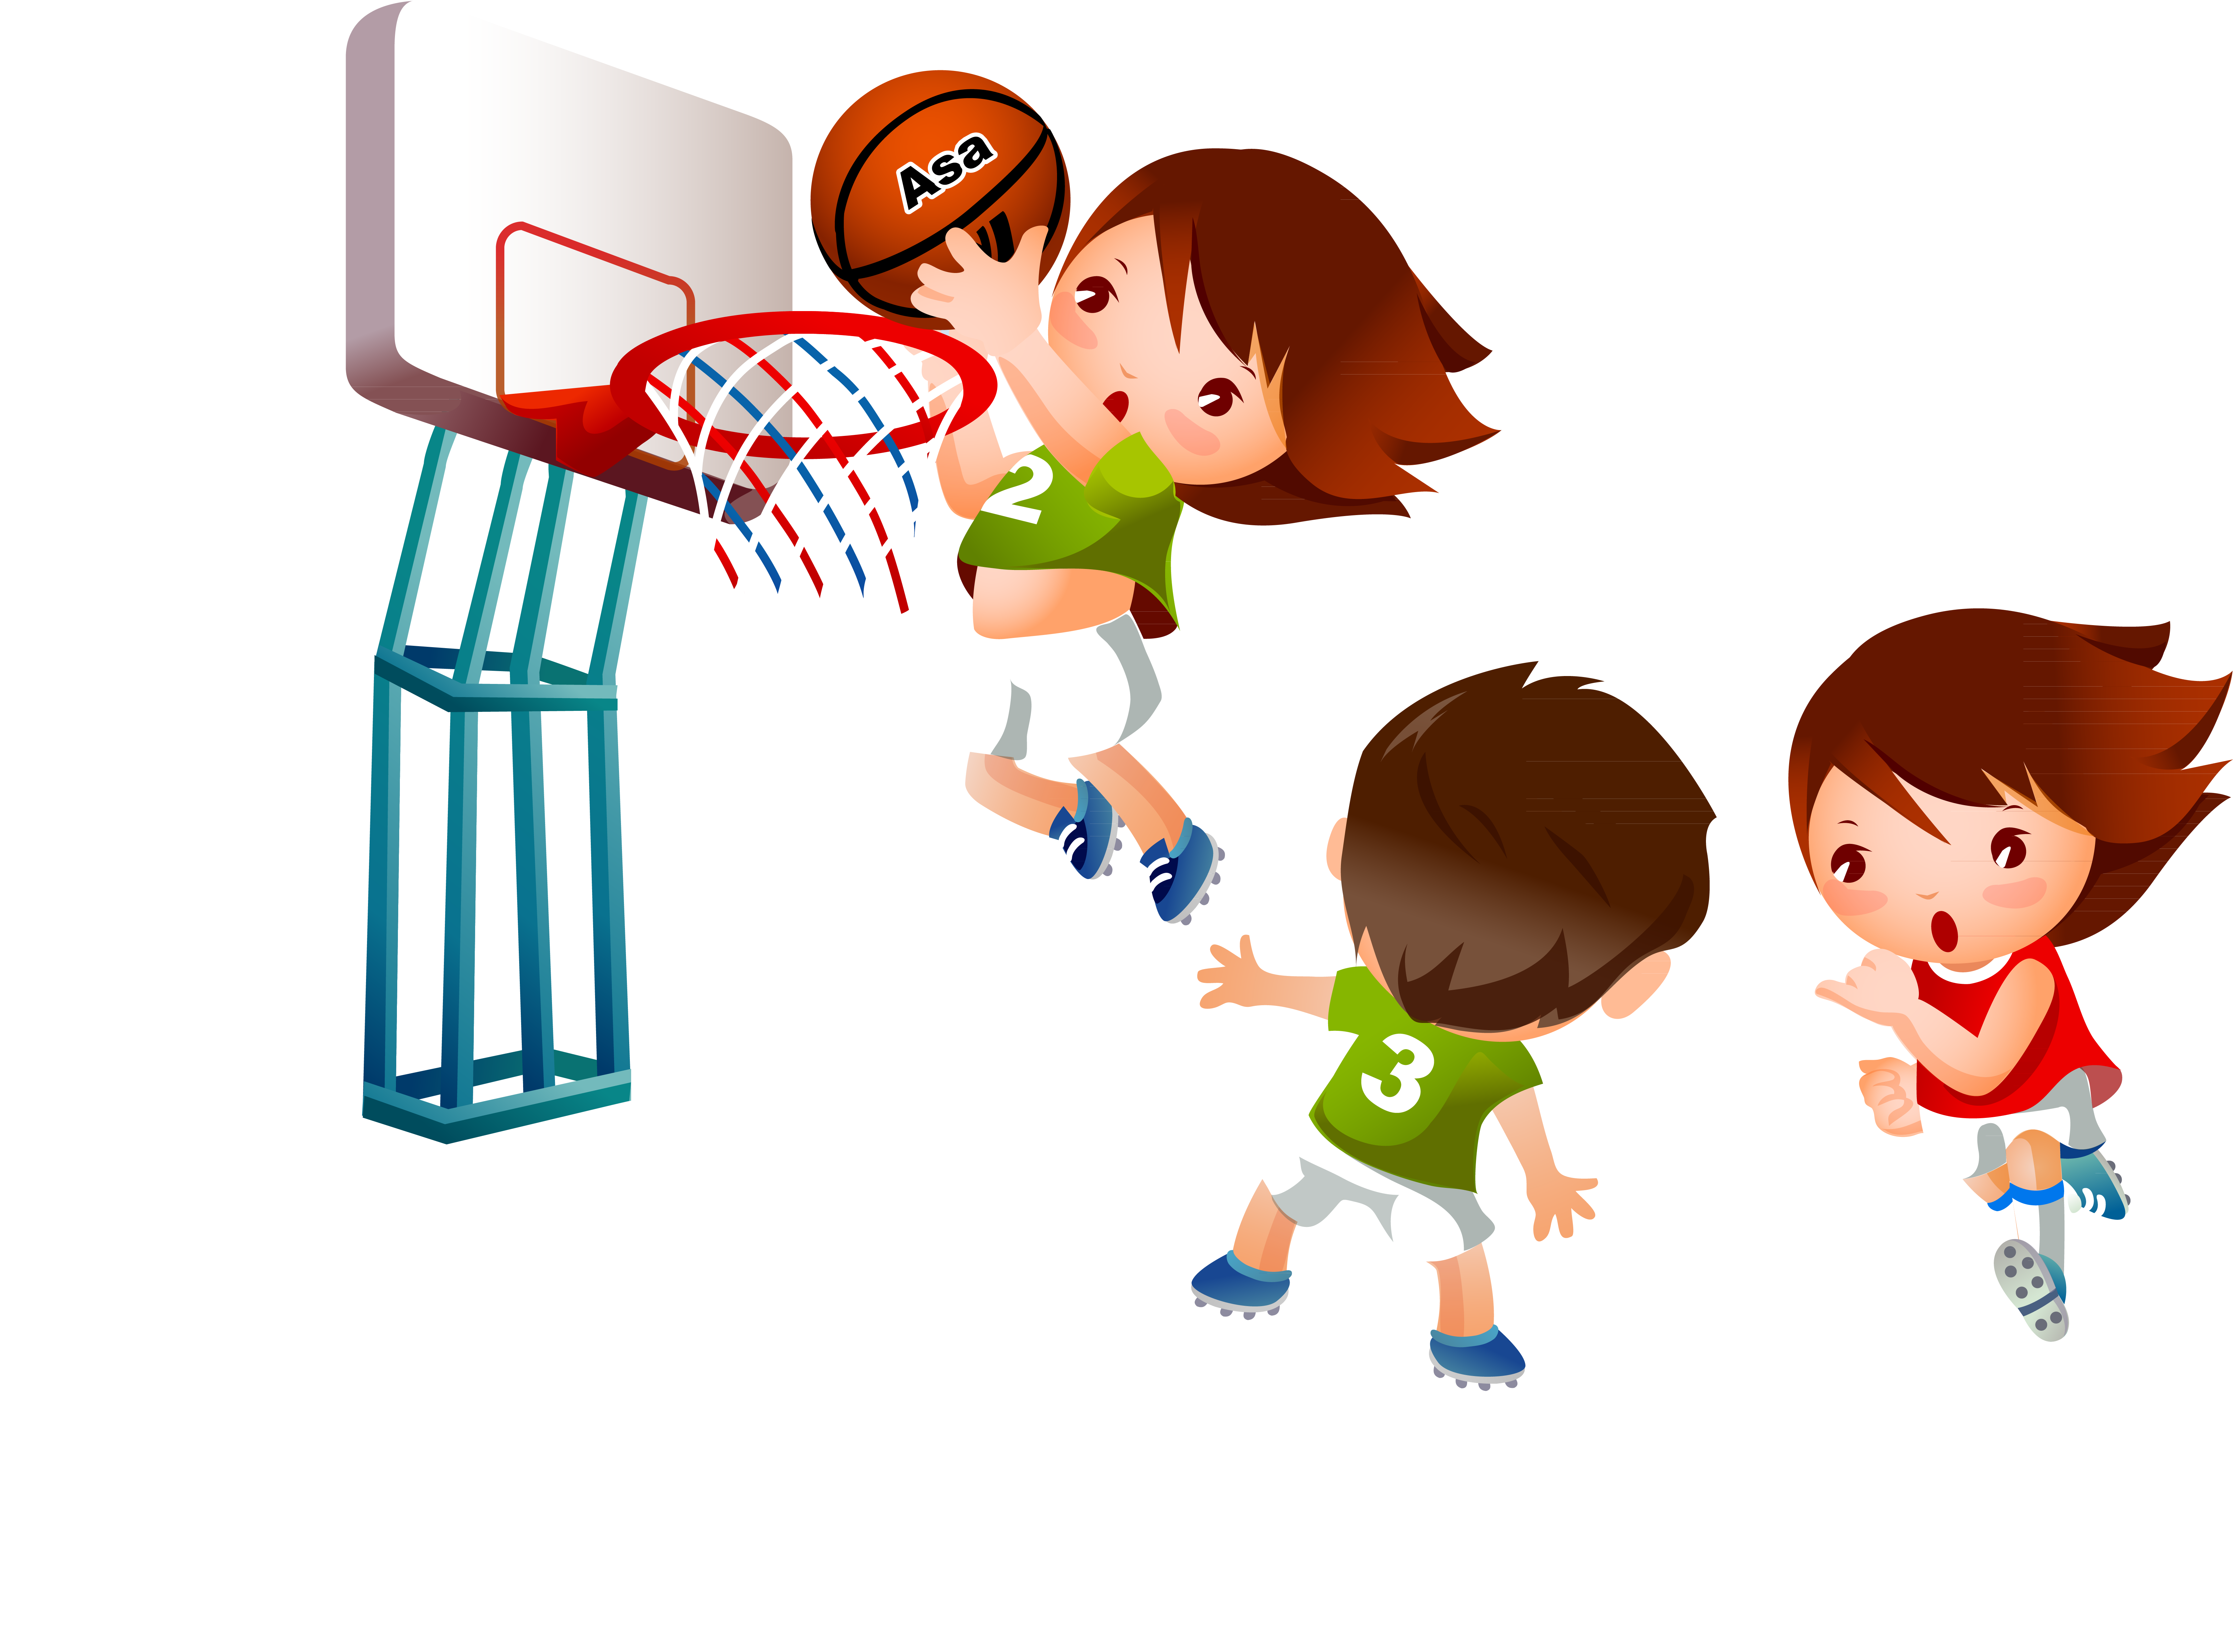 Gambar Bocah Laki Laki Bermain Basket, Ilustrasi Karakter Olahraga Kebugaran, Kebugaran Anak ...